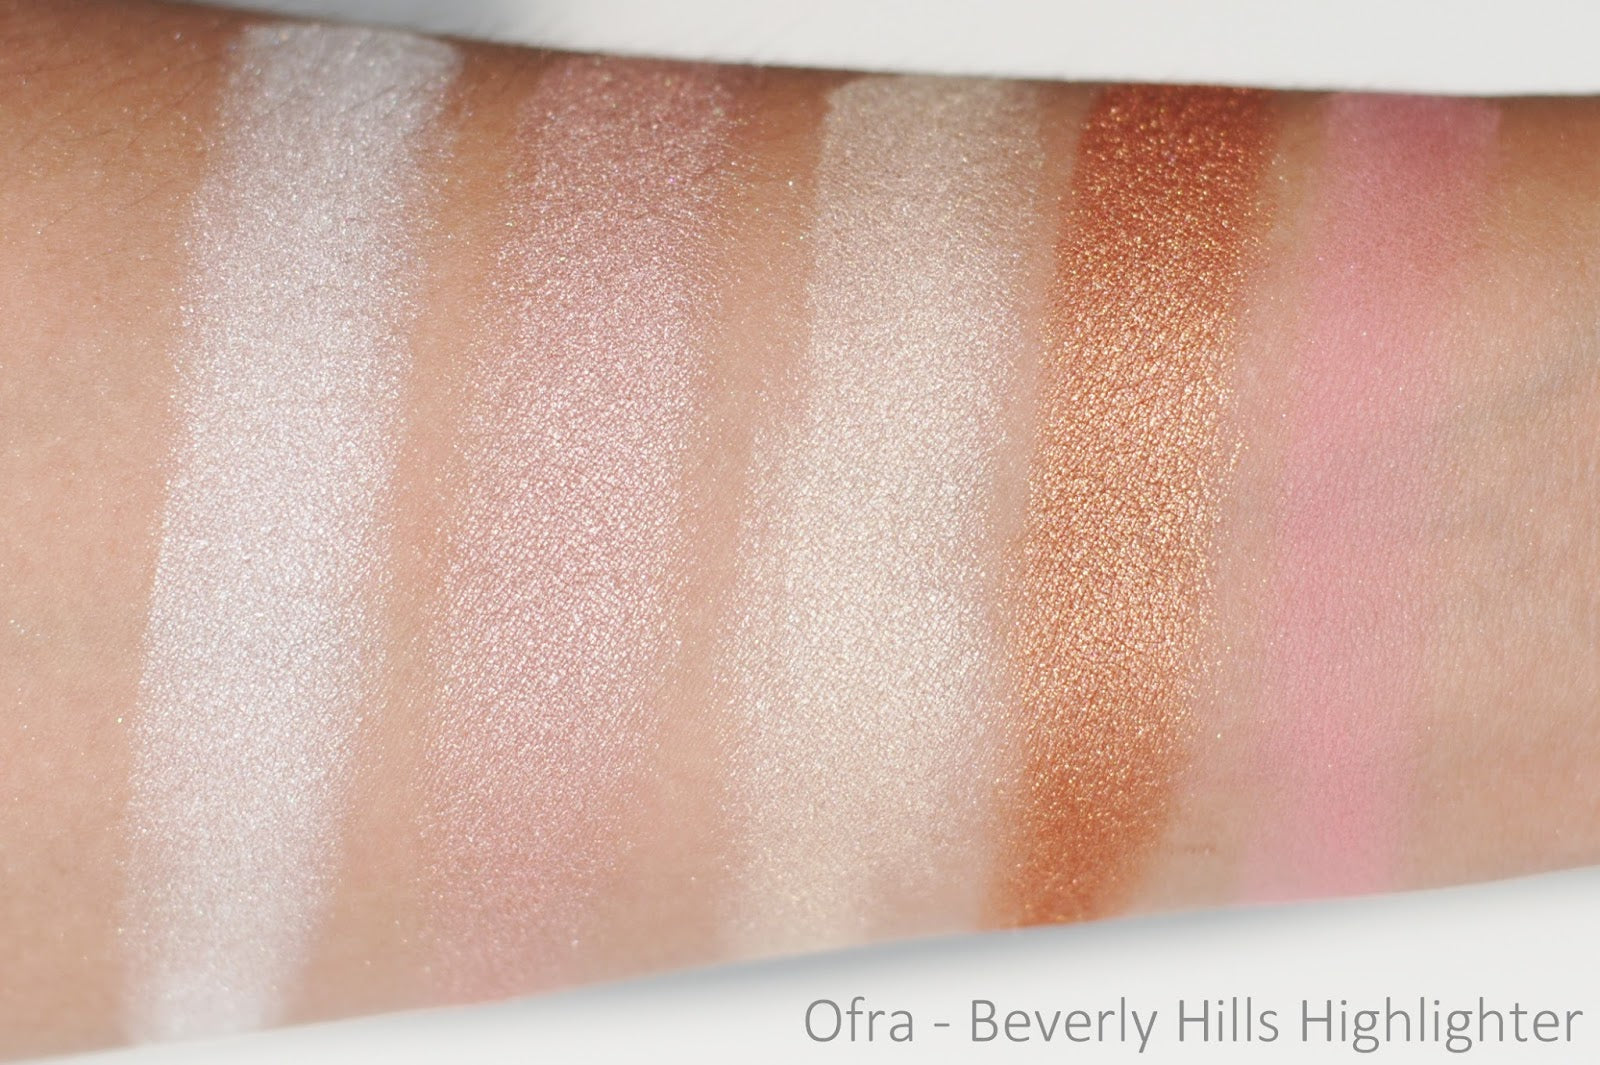 Ofra Cosmetics - Highlighter Beverly Hills